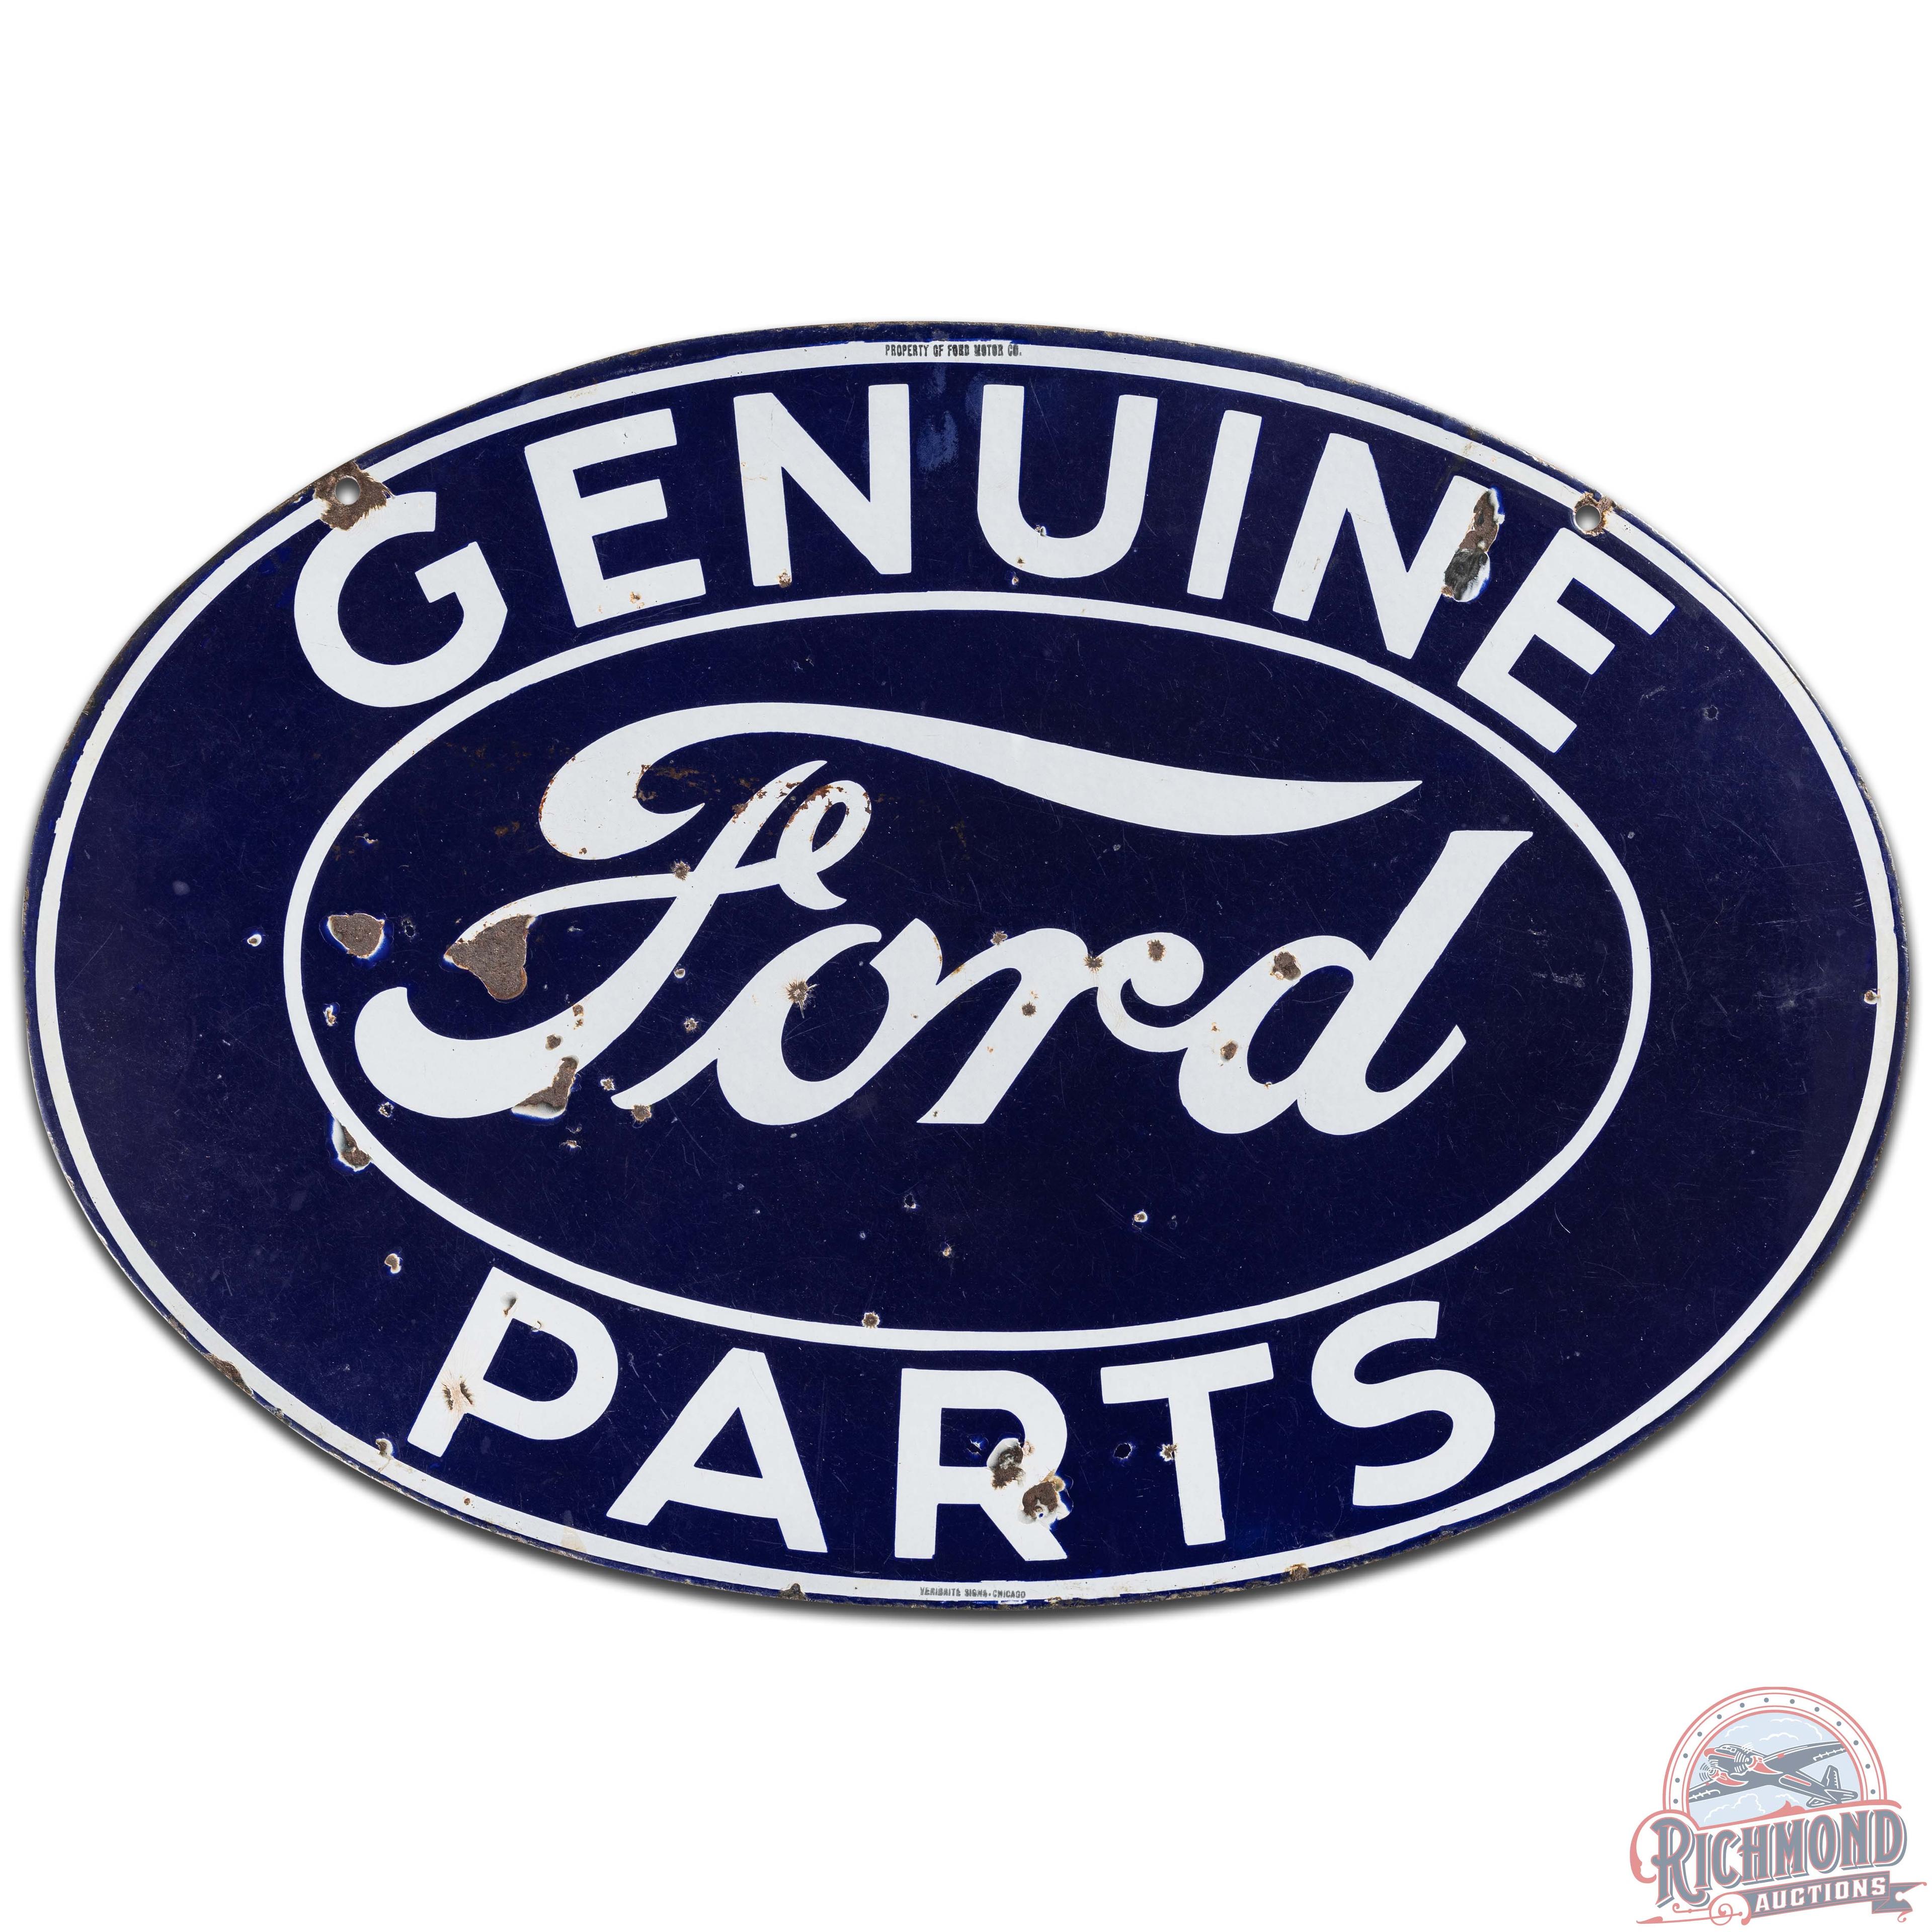 Ford Genuine Parts DS Porcelain Oval Sign